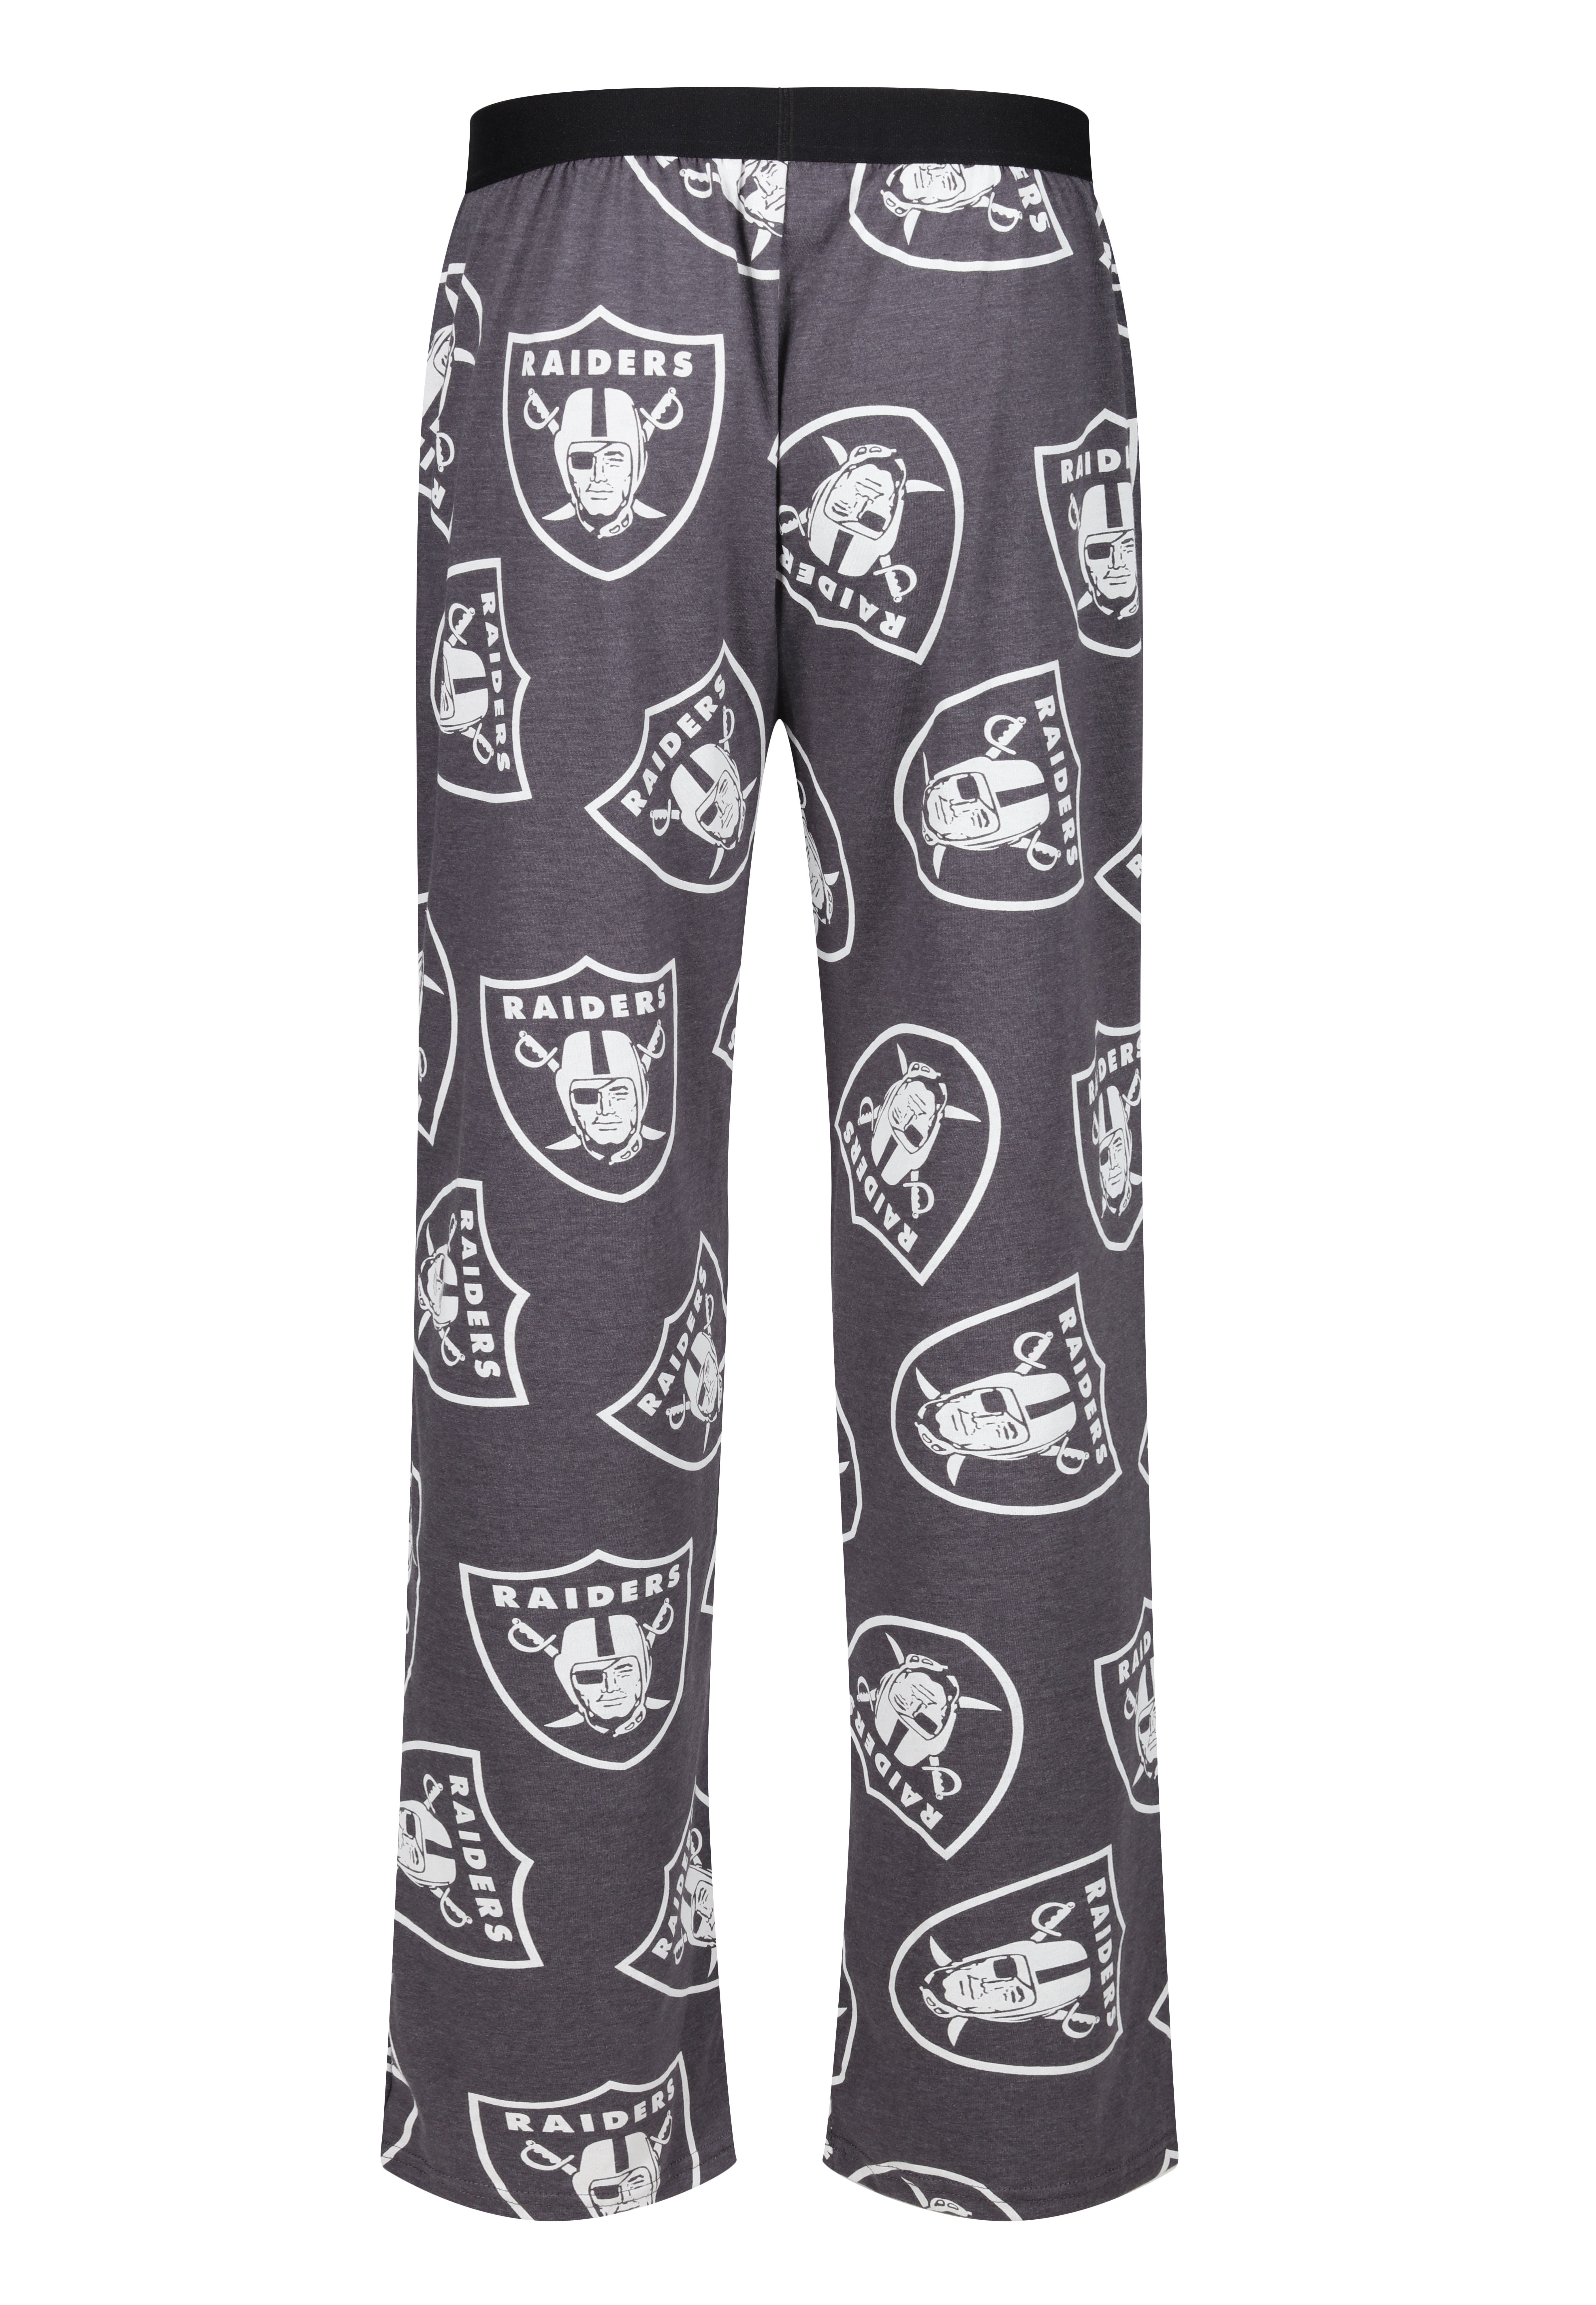 Loungepants Las Recovered Vegas Loungepants Charcoal Logo Raiders Marl Outline NFL